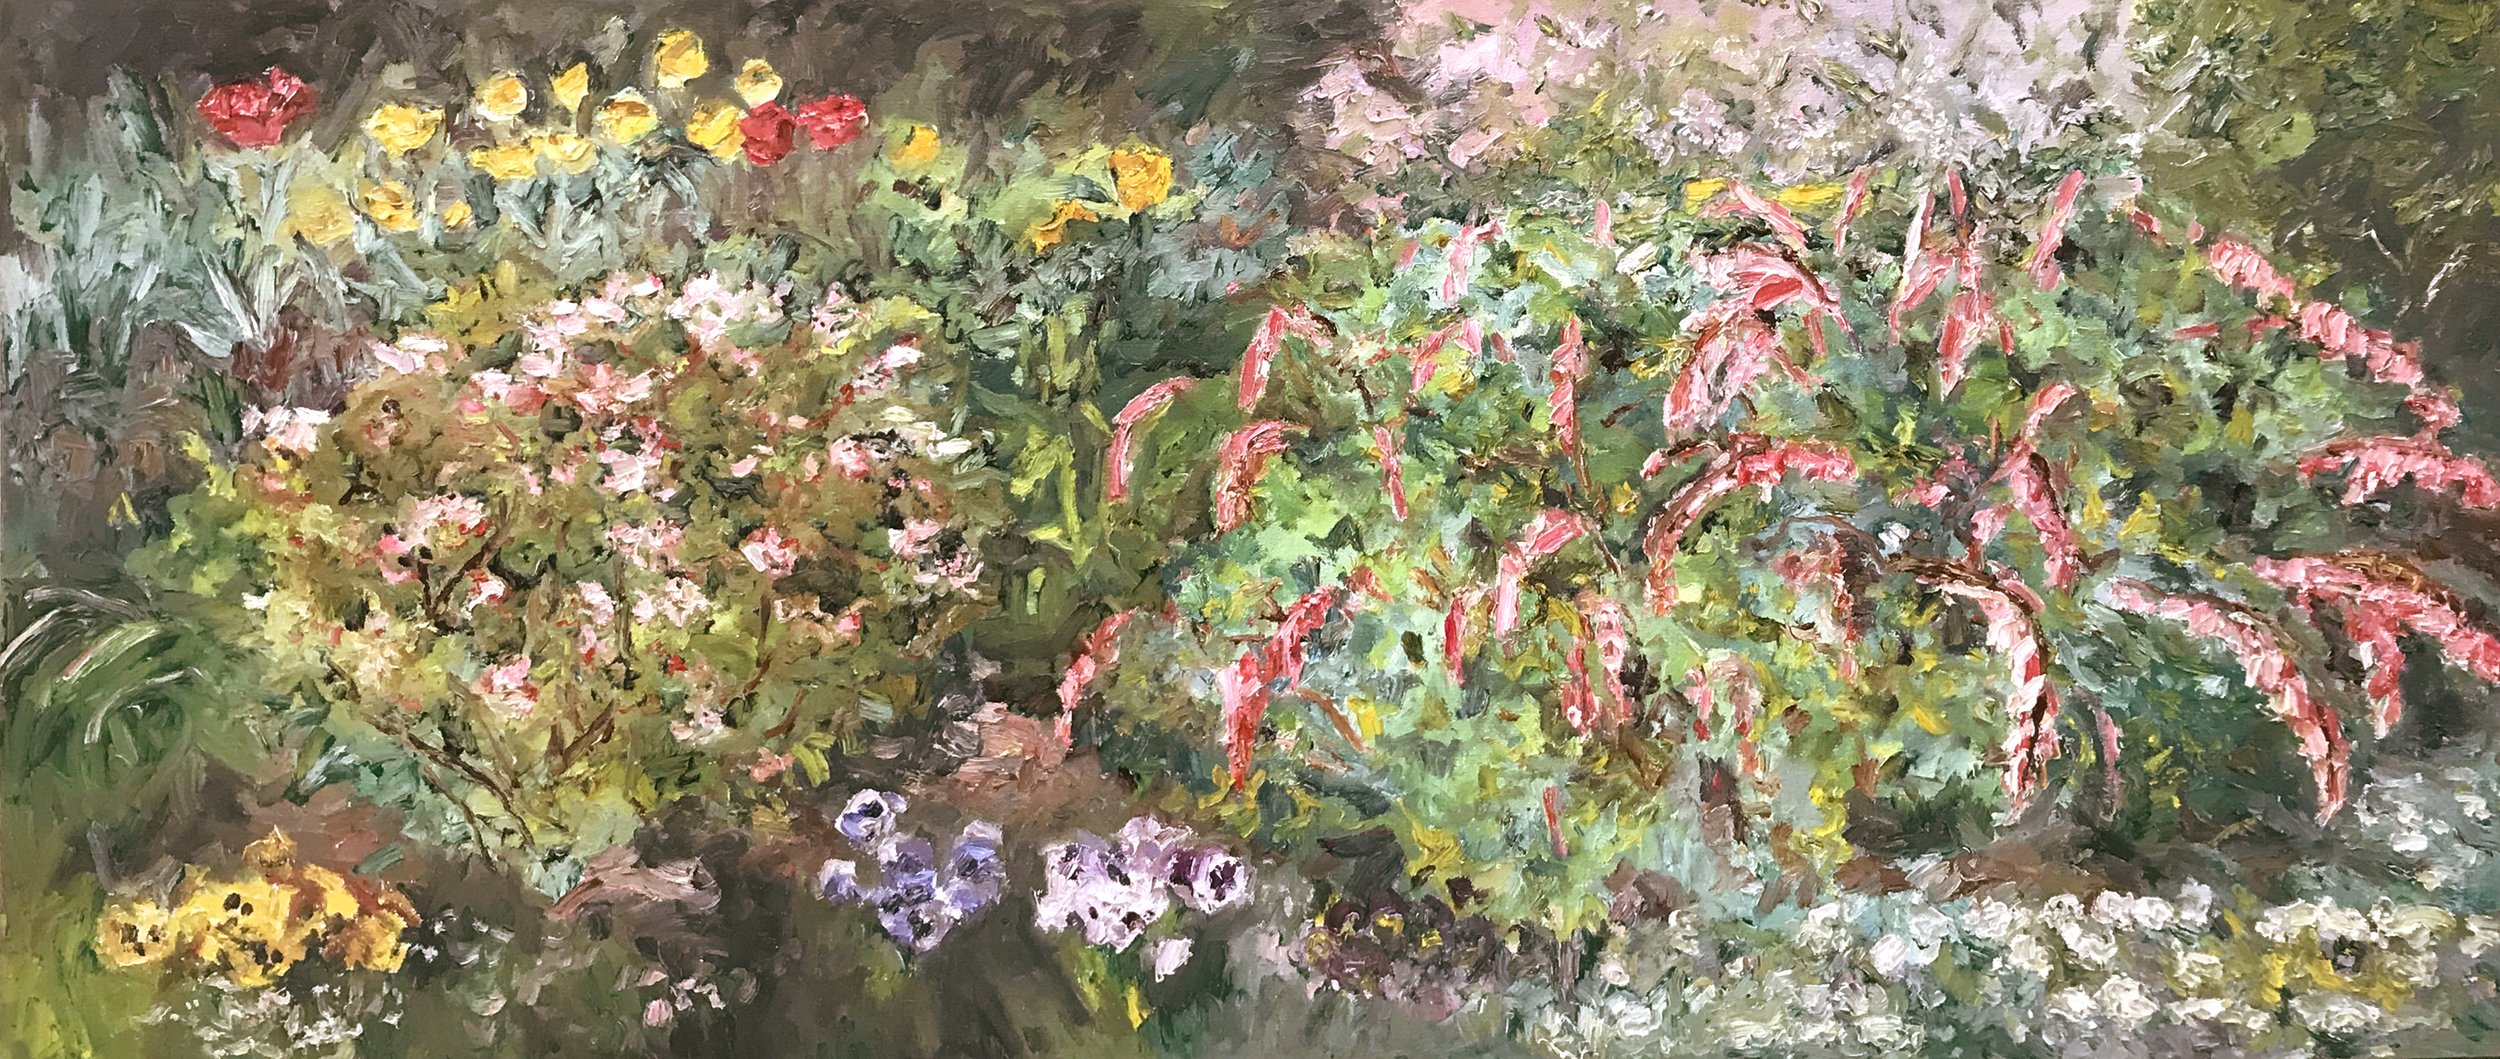 East Garden (OC-71-90), 1990, 30 x 70 in., oil on canvas 